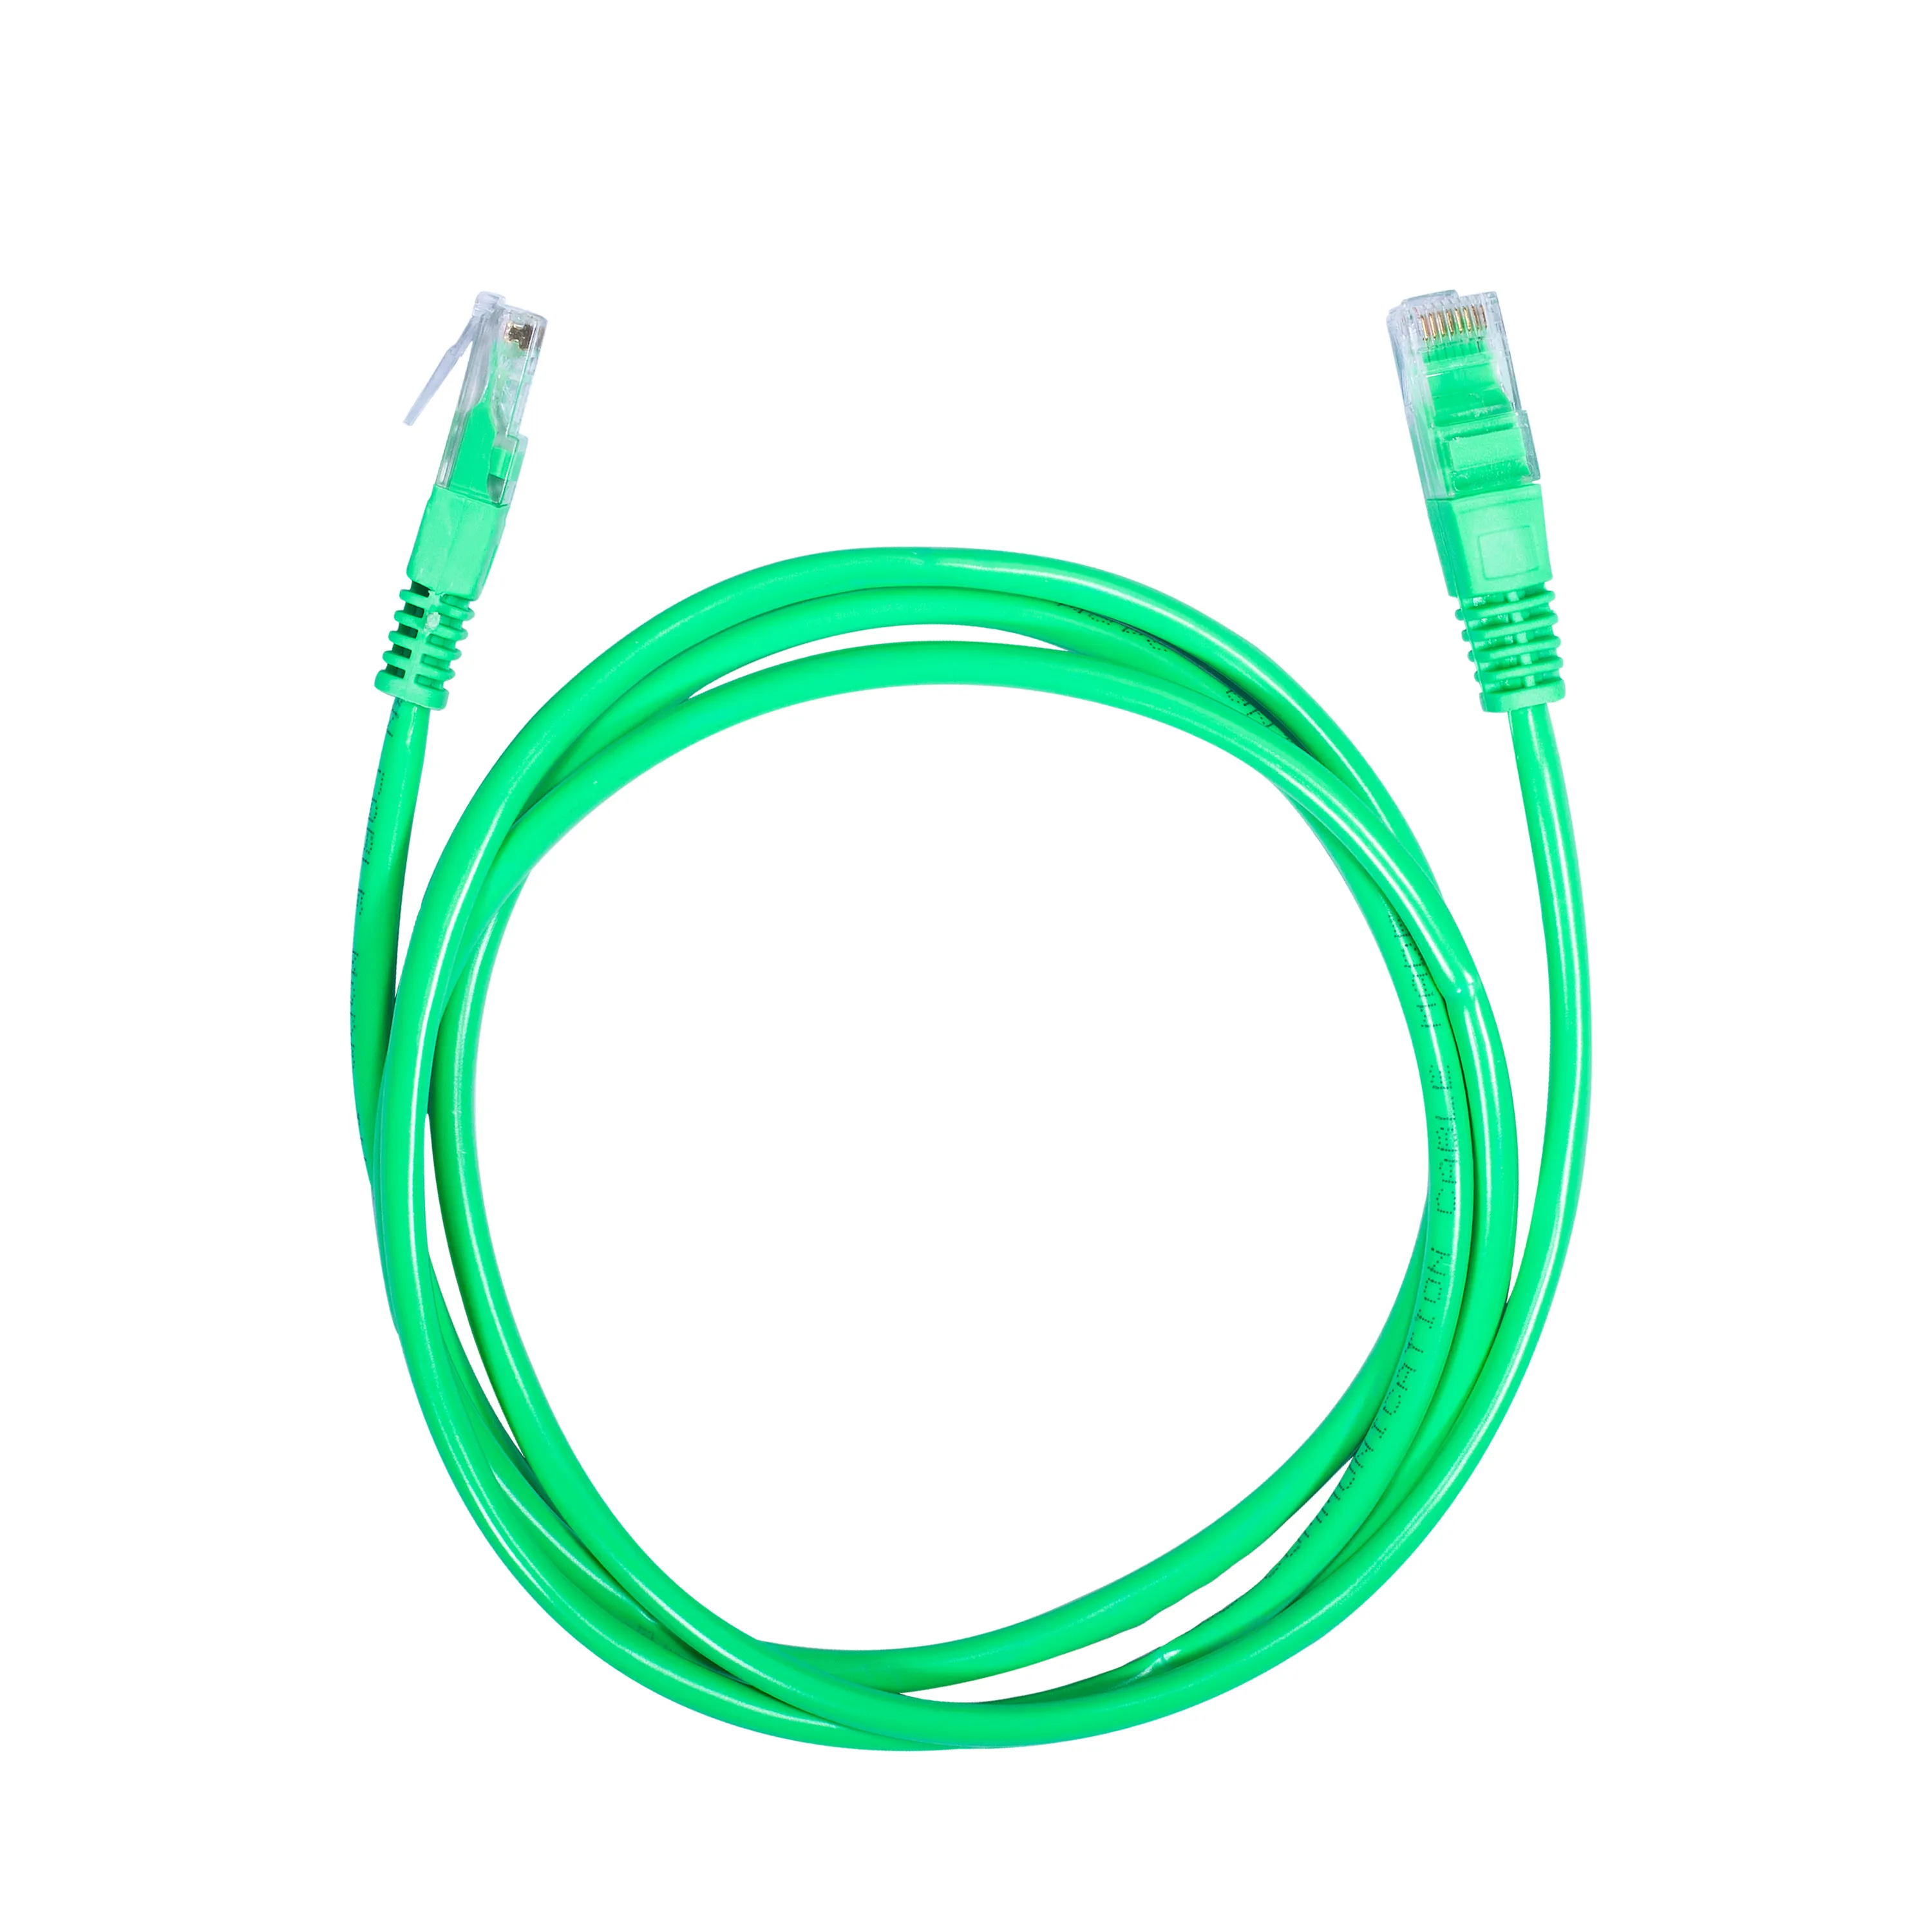 Rekabetçi fiyat UTP FTP SFTP Cat5e yama kablosu 0.5m 1m/2m/3m/5m RJ45 cat5e yama kablosu kablosu